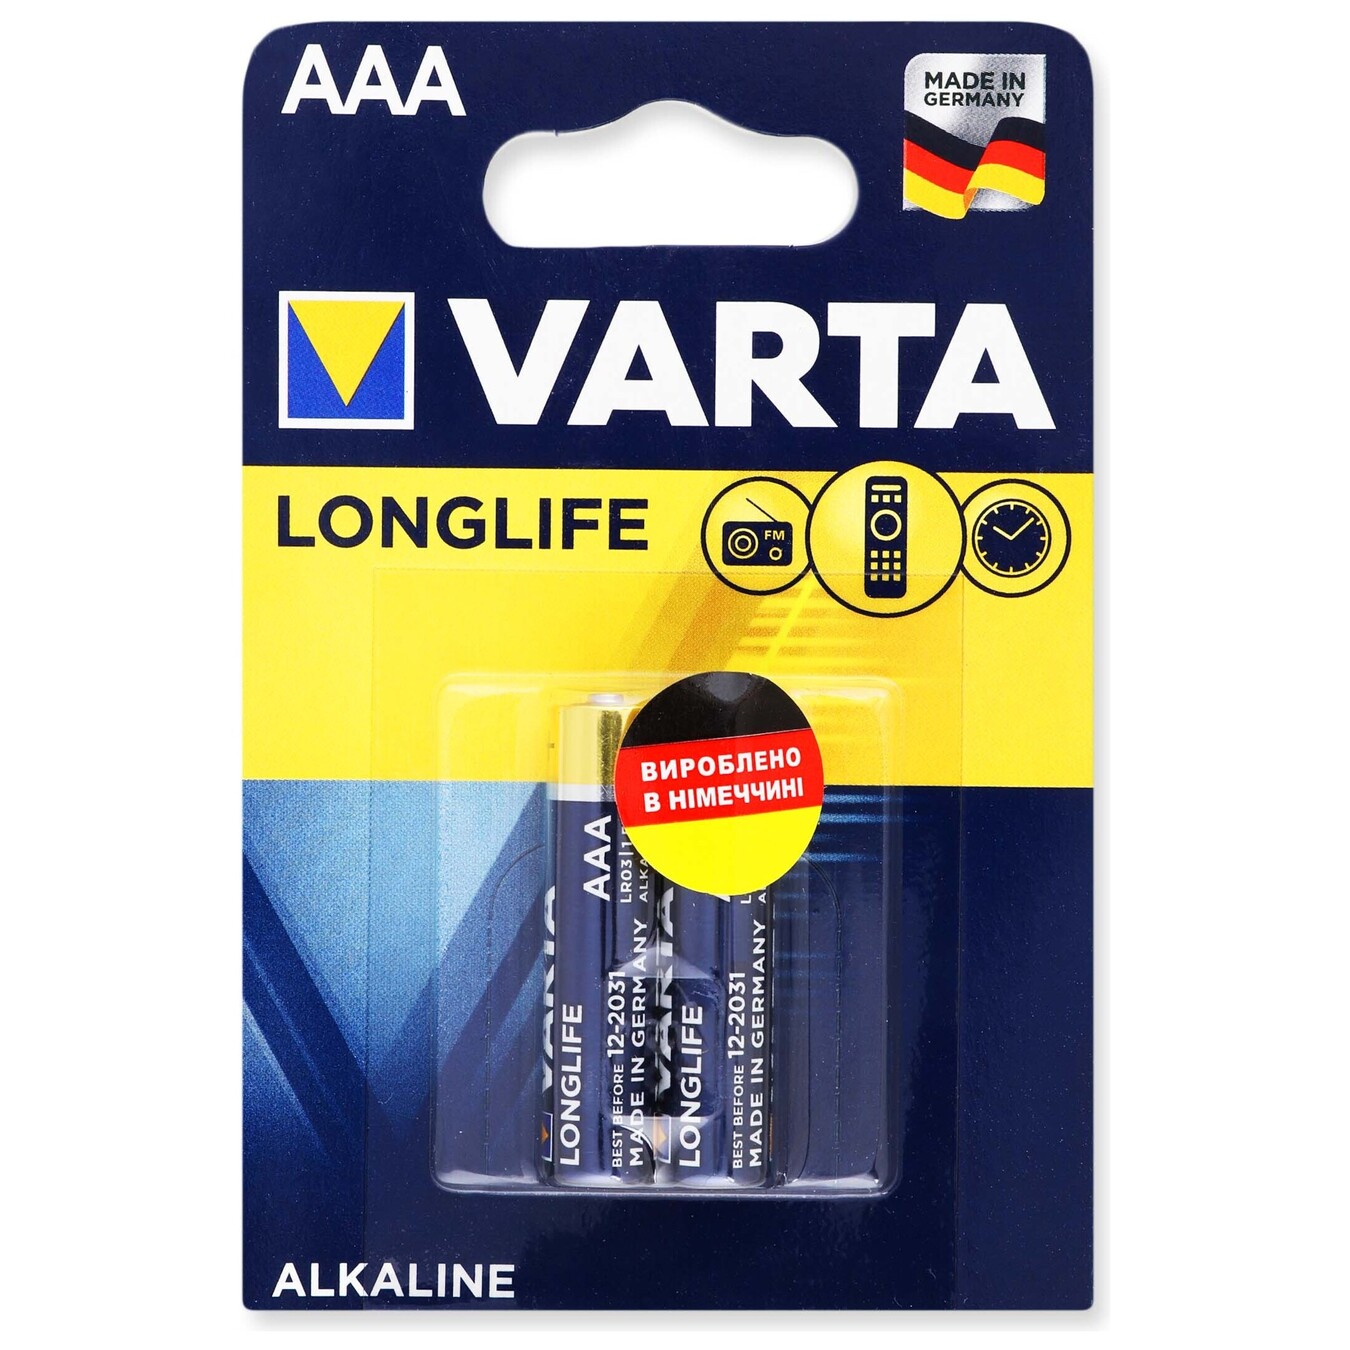 Varta Longlife AAA BLI 2 battery